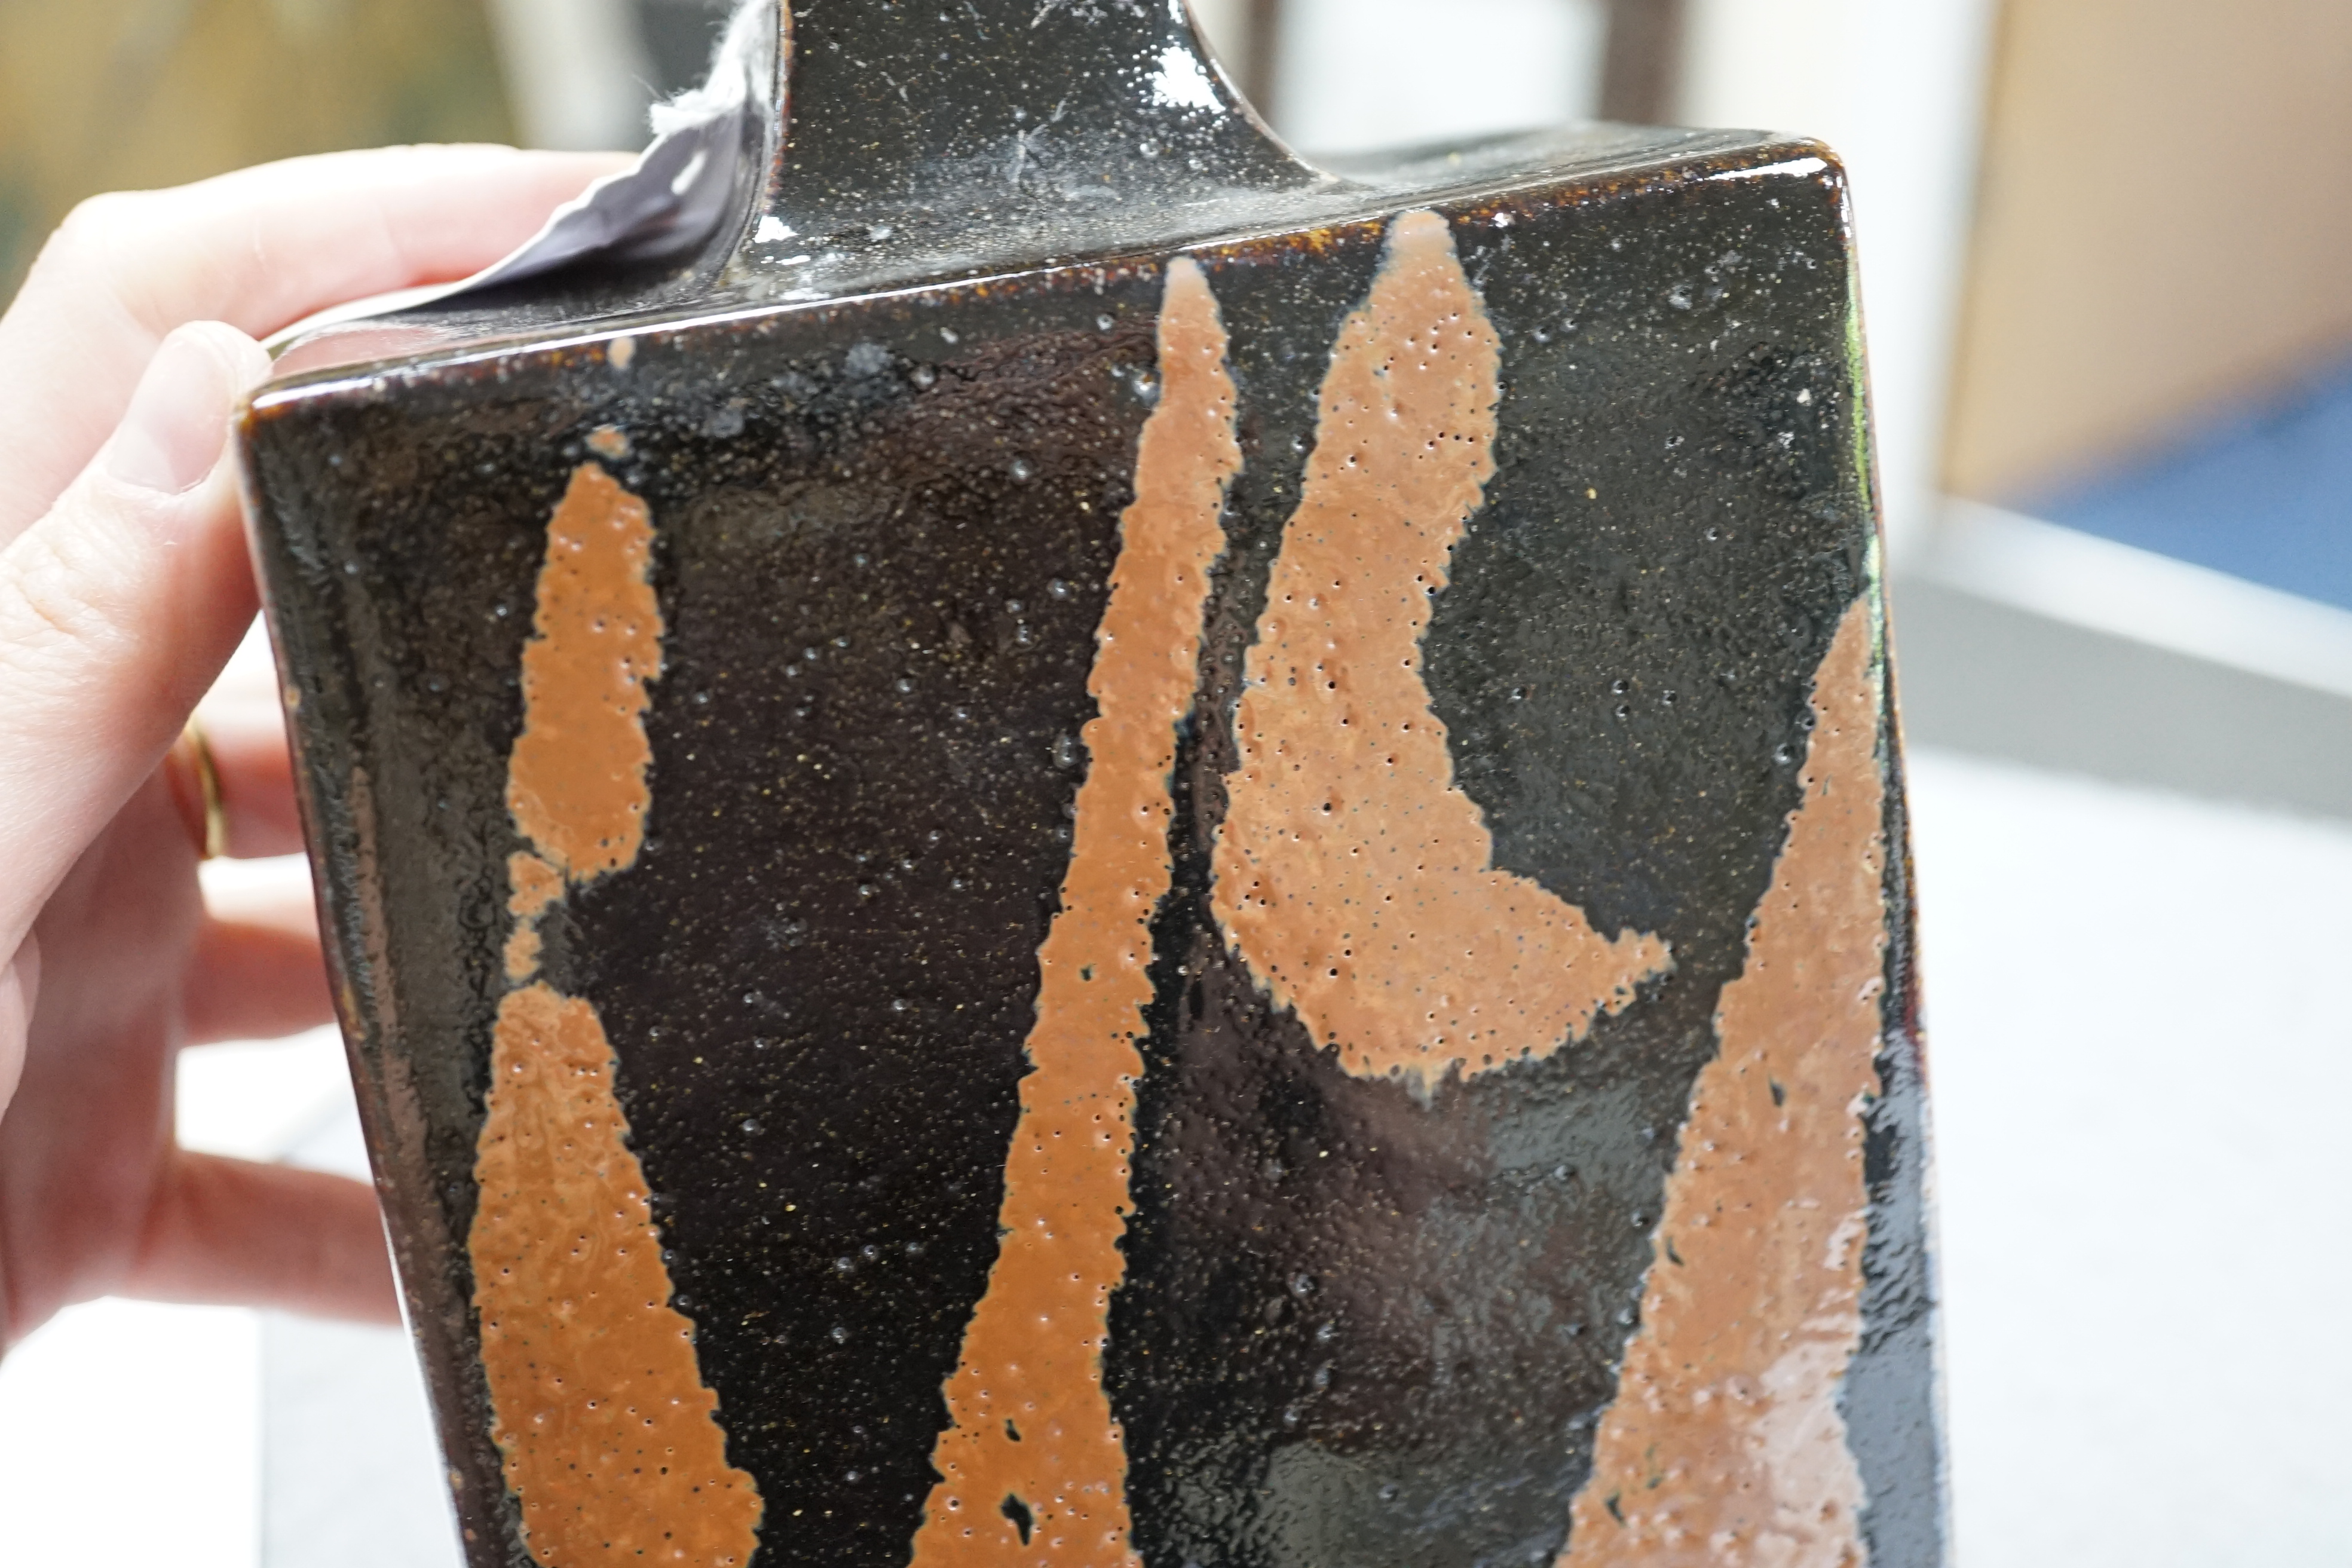 Attributed to Shoji Hamada (1894-1978), a tenmoku glazed bottle vase